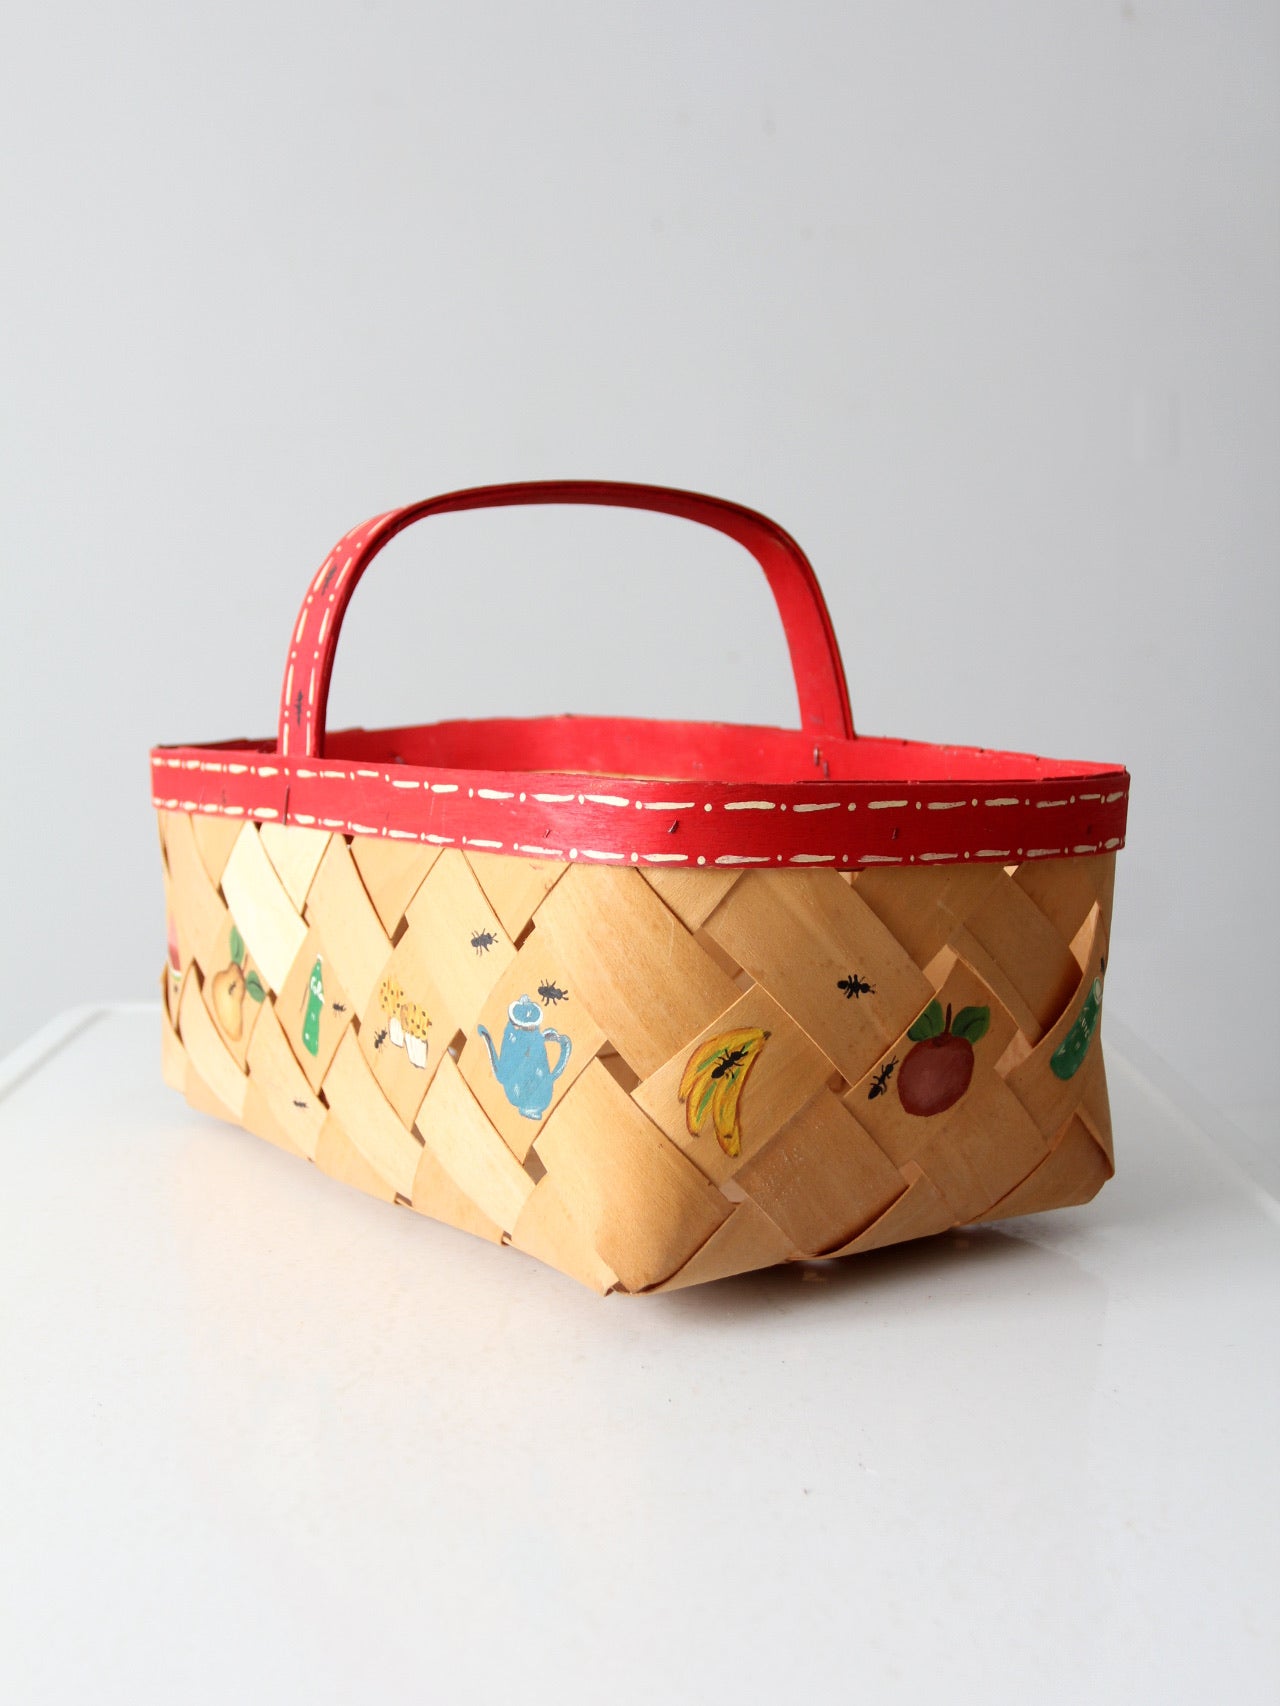 vintage hand painted "Picnic" basket